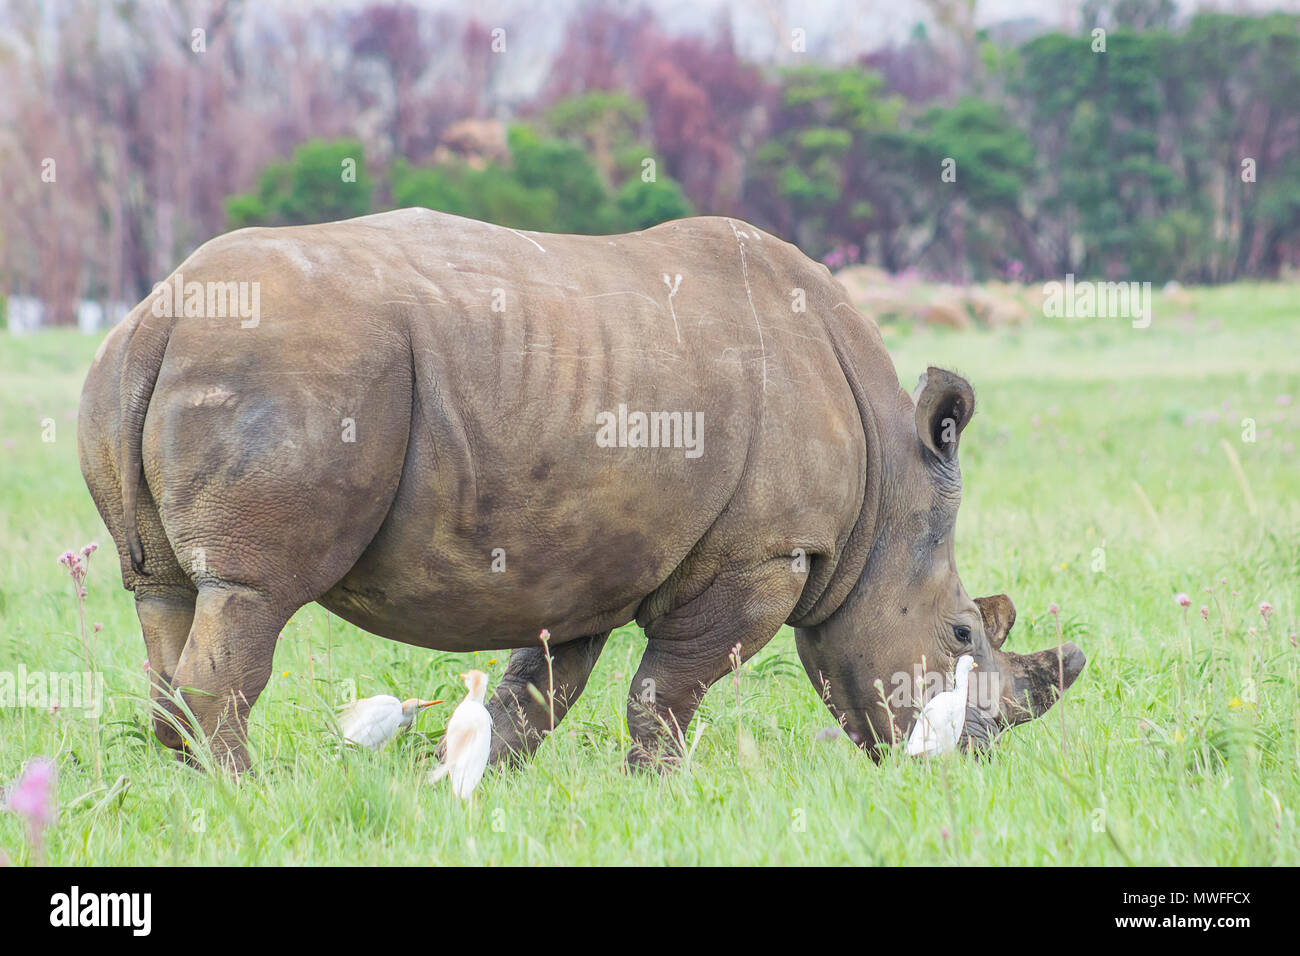 Rhino pastoreo con aves alrededor Foto de stock